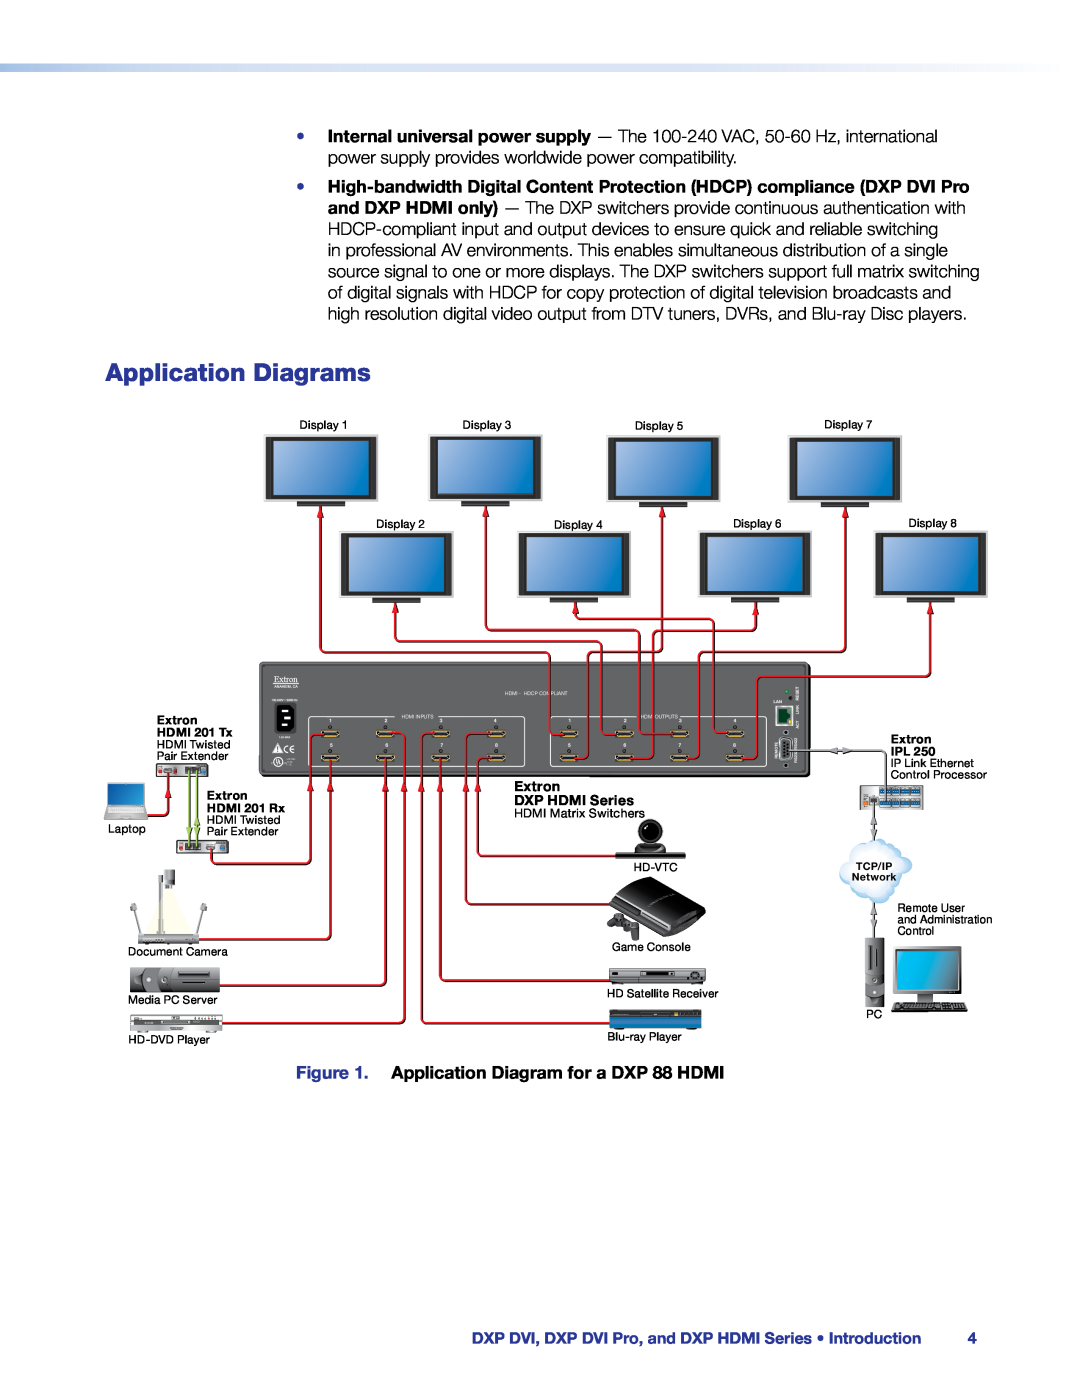 Extron electronic DXP DVI PRO manual Application Diagrams, Application Diagram for a DXP 88 HDMI 